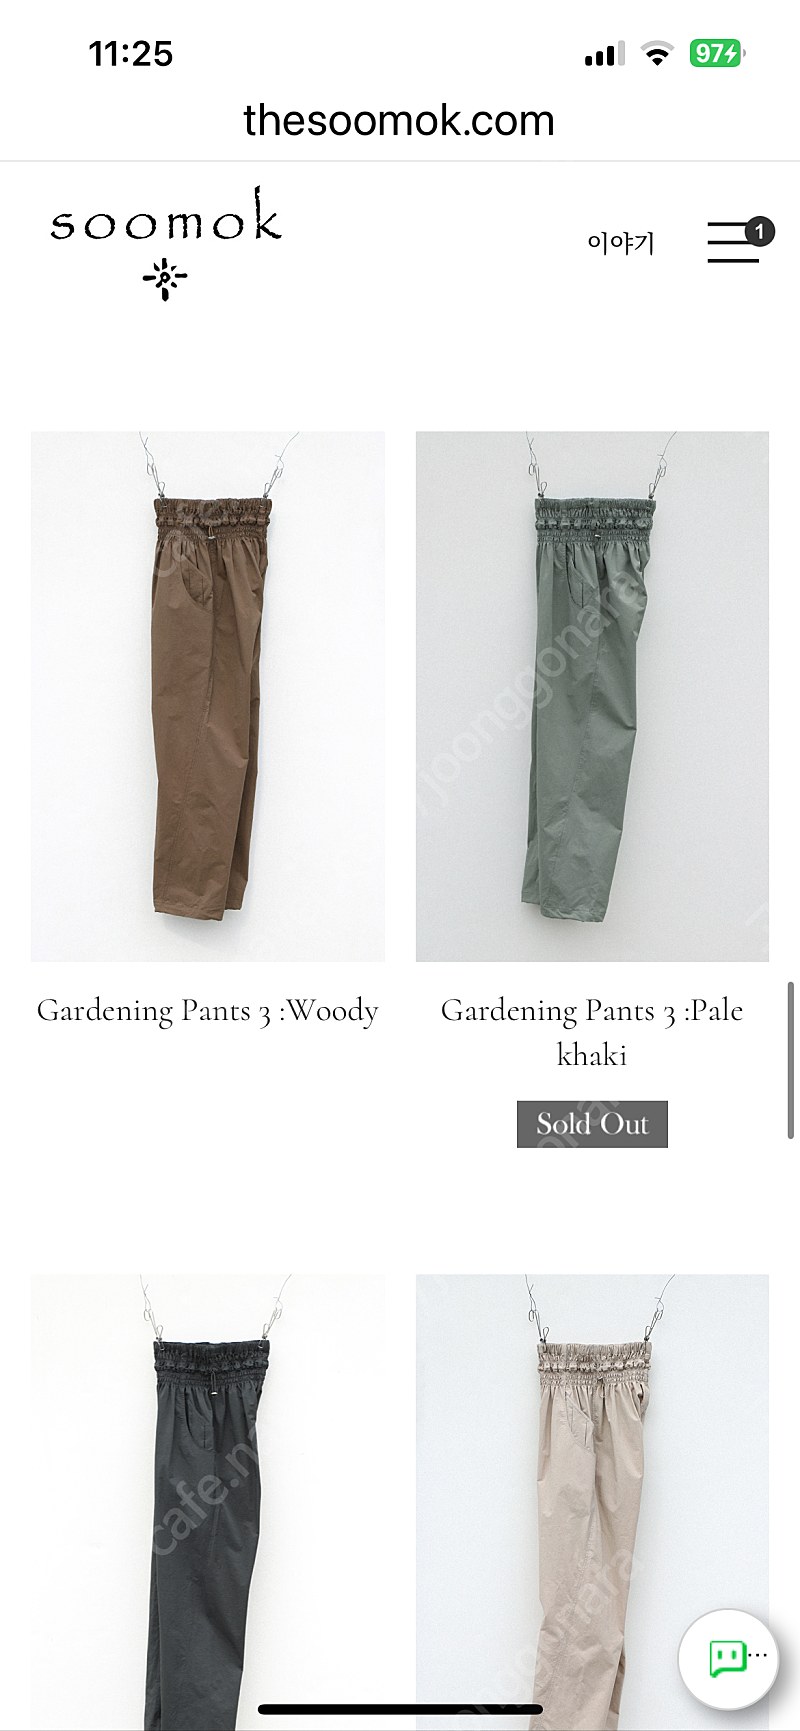 Soomok 수목 가드닝팬츠 3 pale khaki 페일카키색 민트색 gardening pants